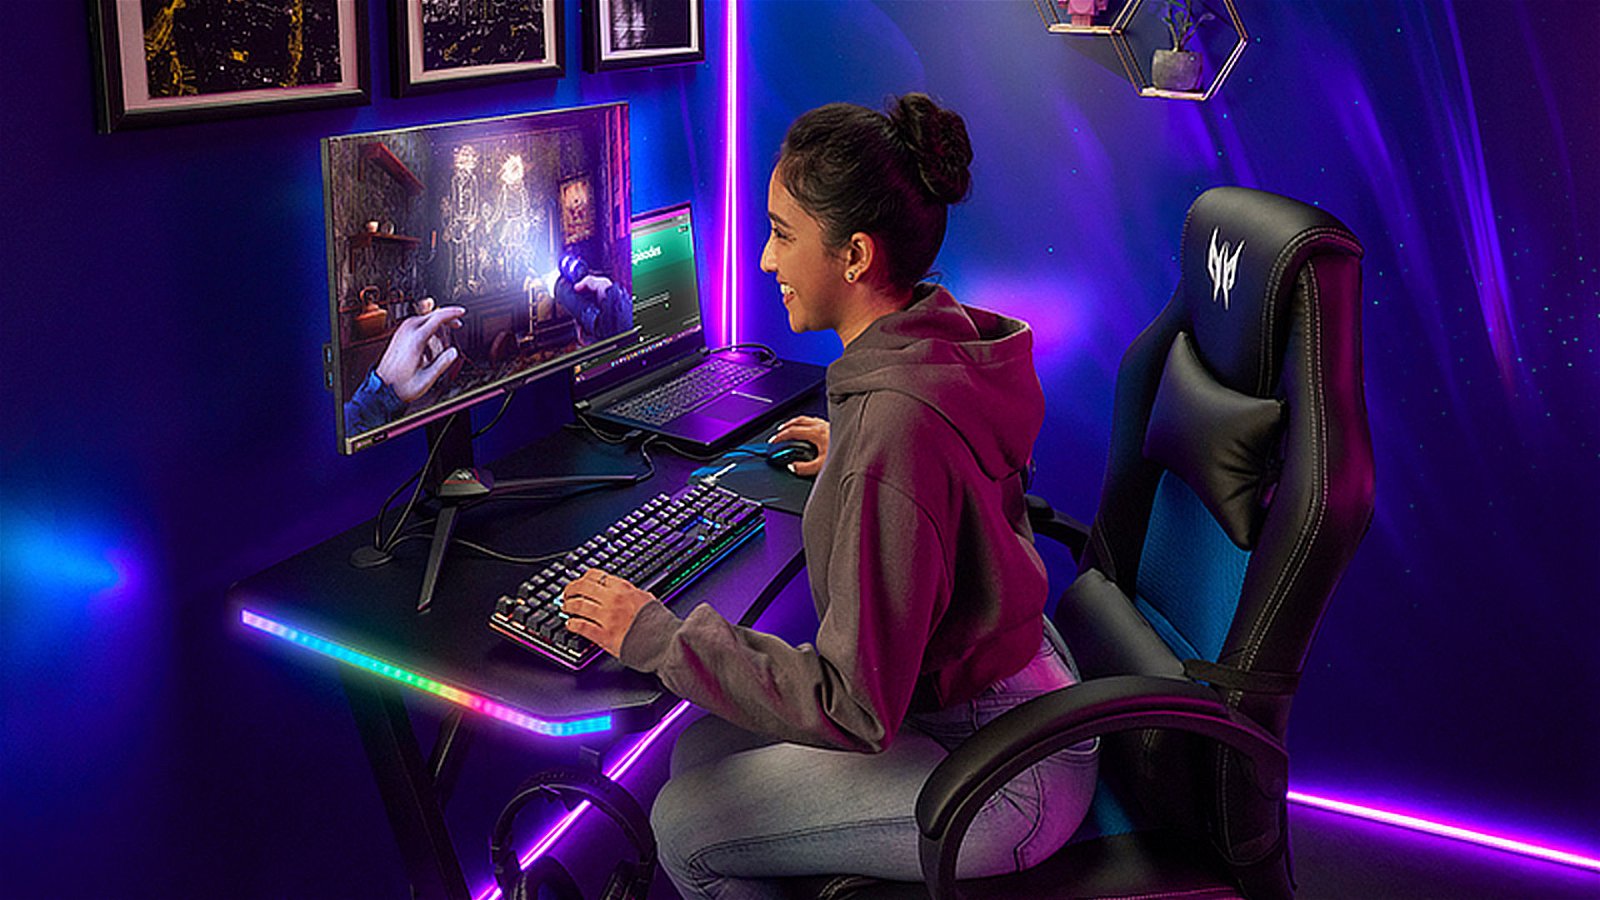 Sedia gaming Acer Predator scontatissima al Black Friday! - SpazioGames